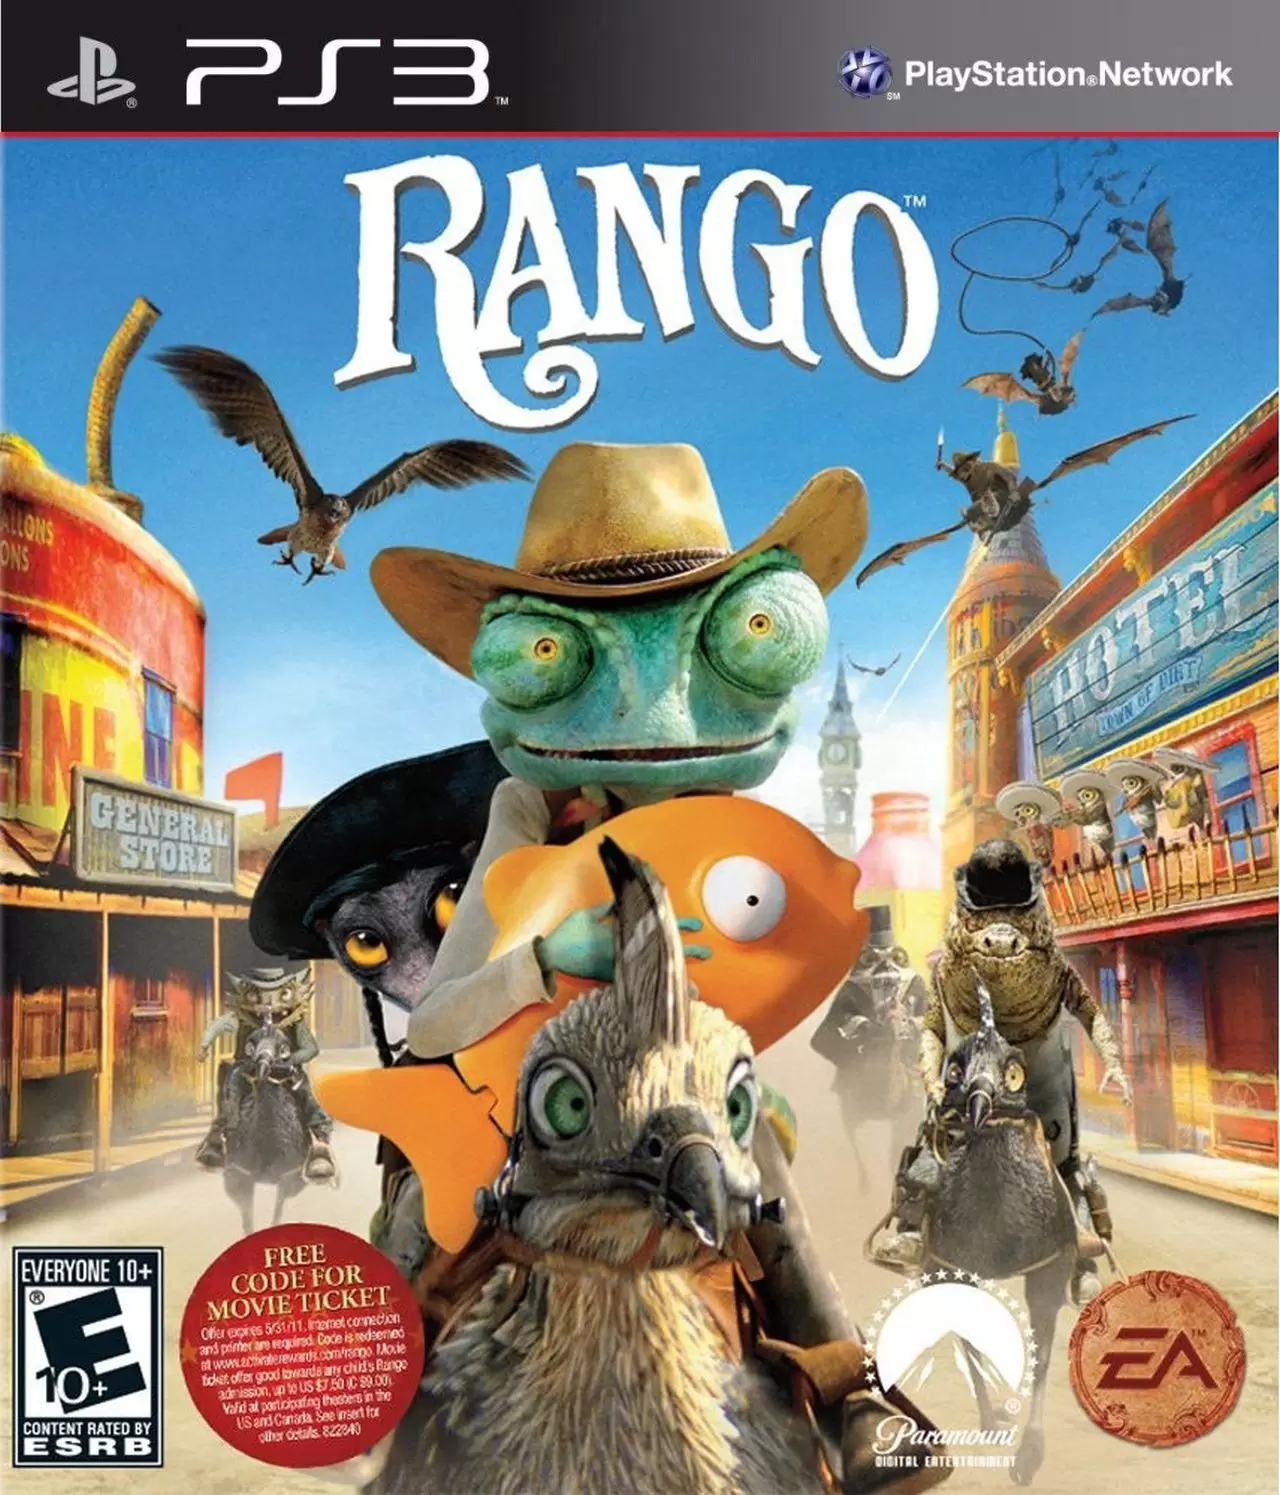 PS3 Games - Rango